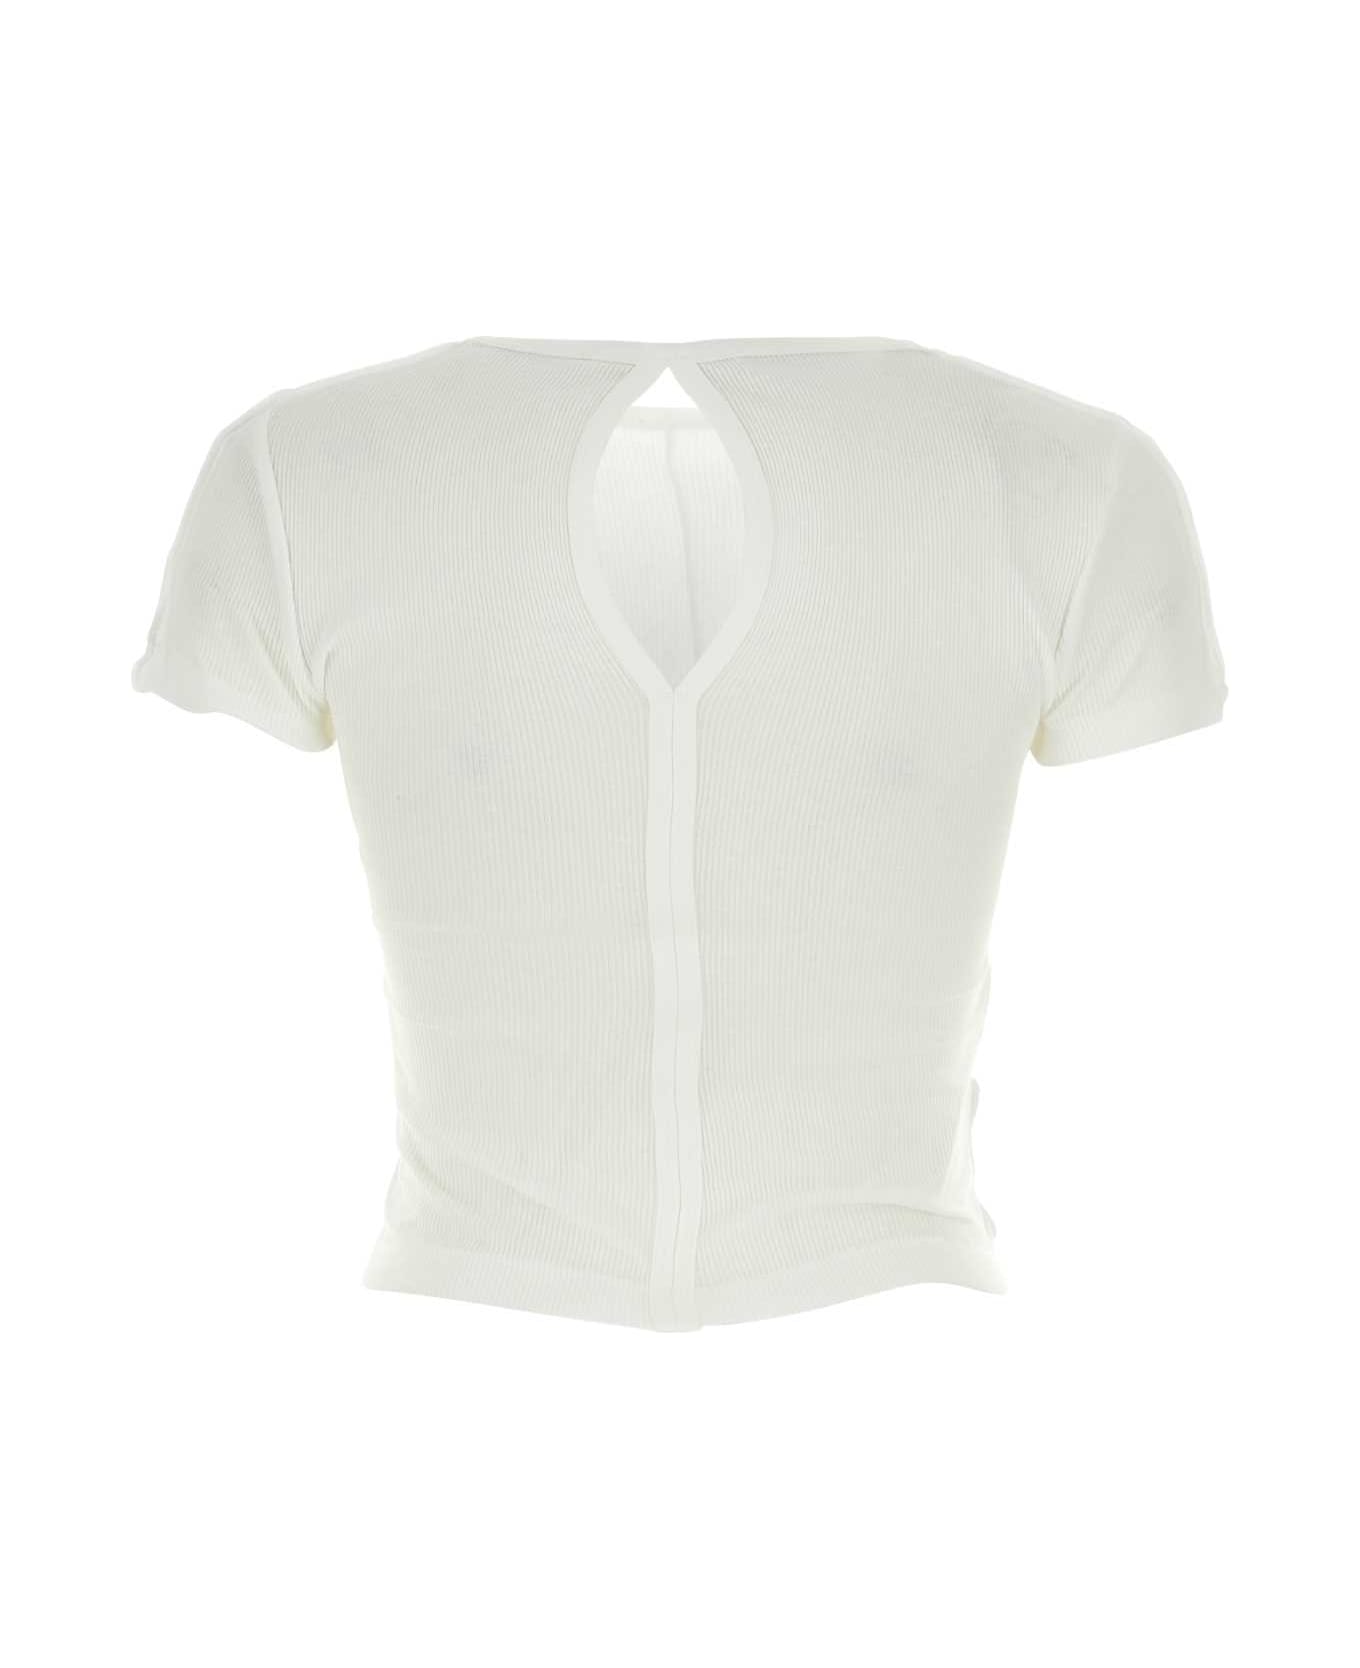 Helmut Lang White Cotton Top - White